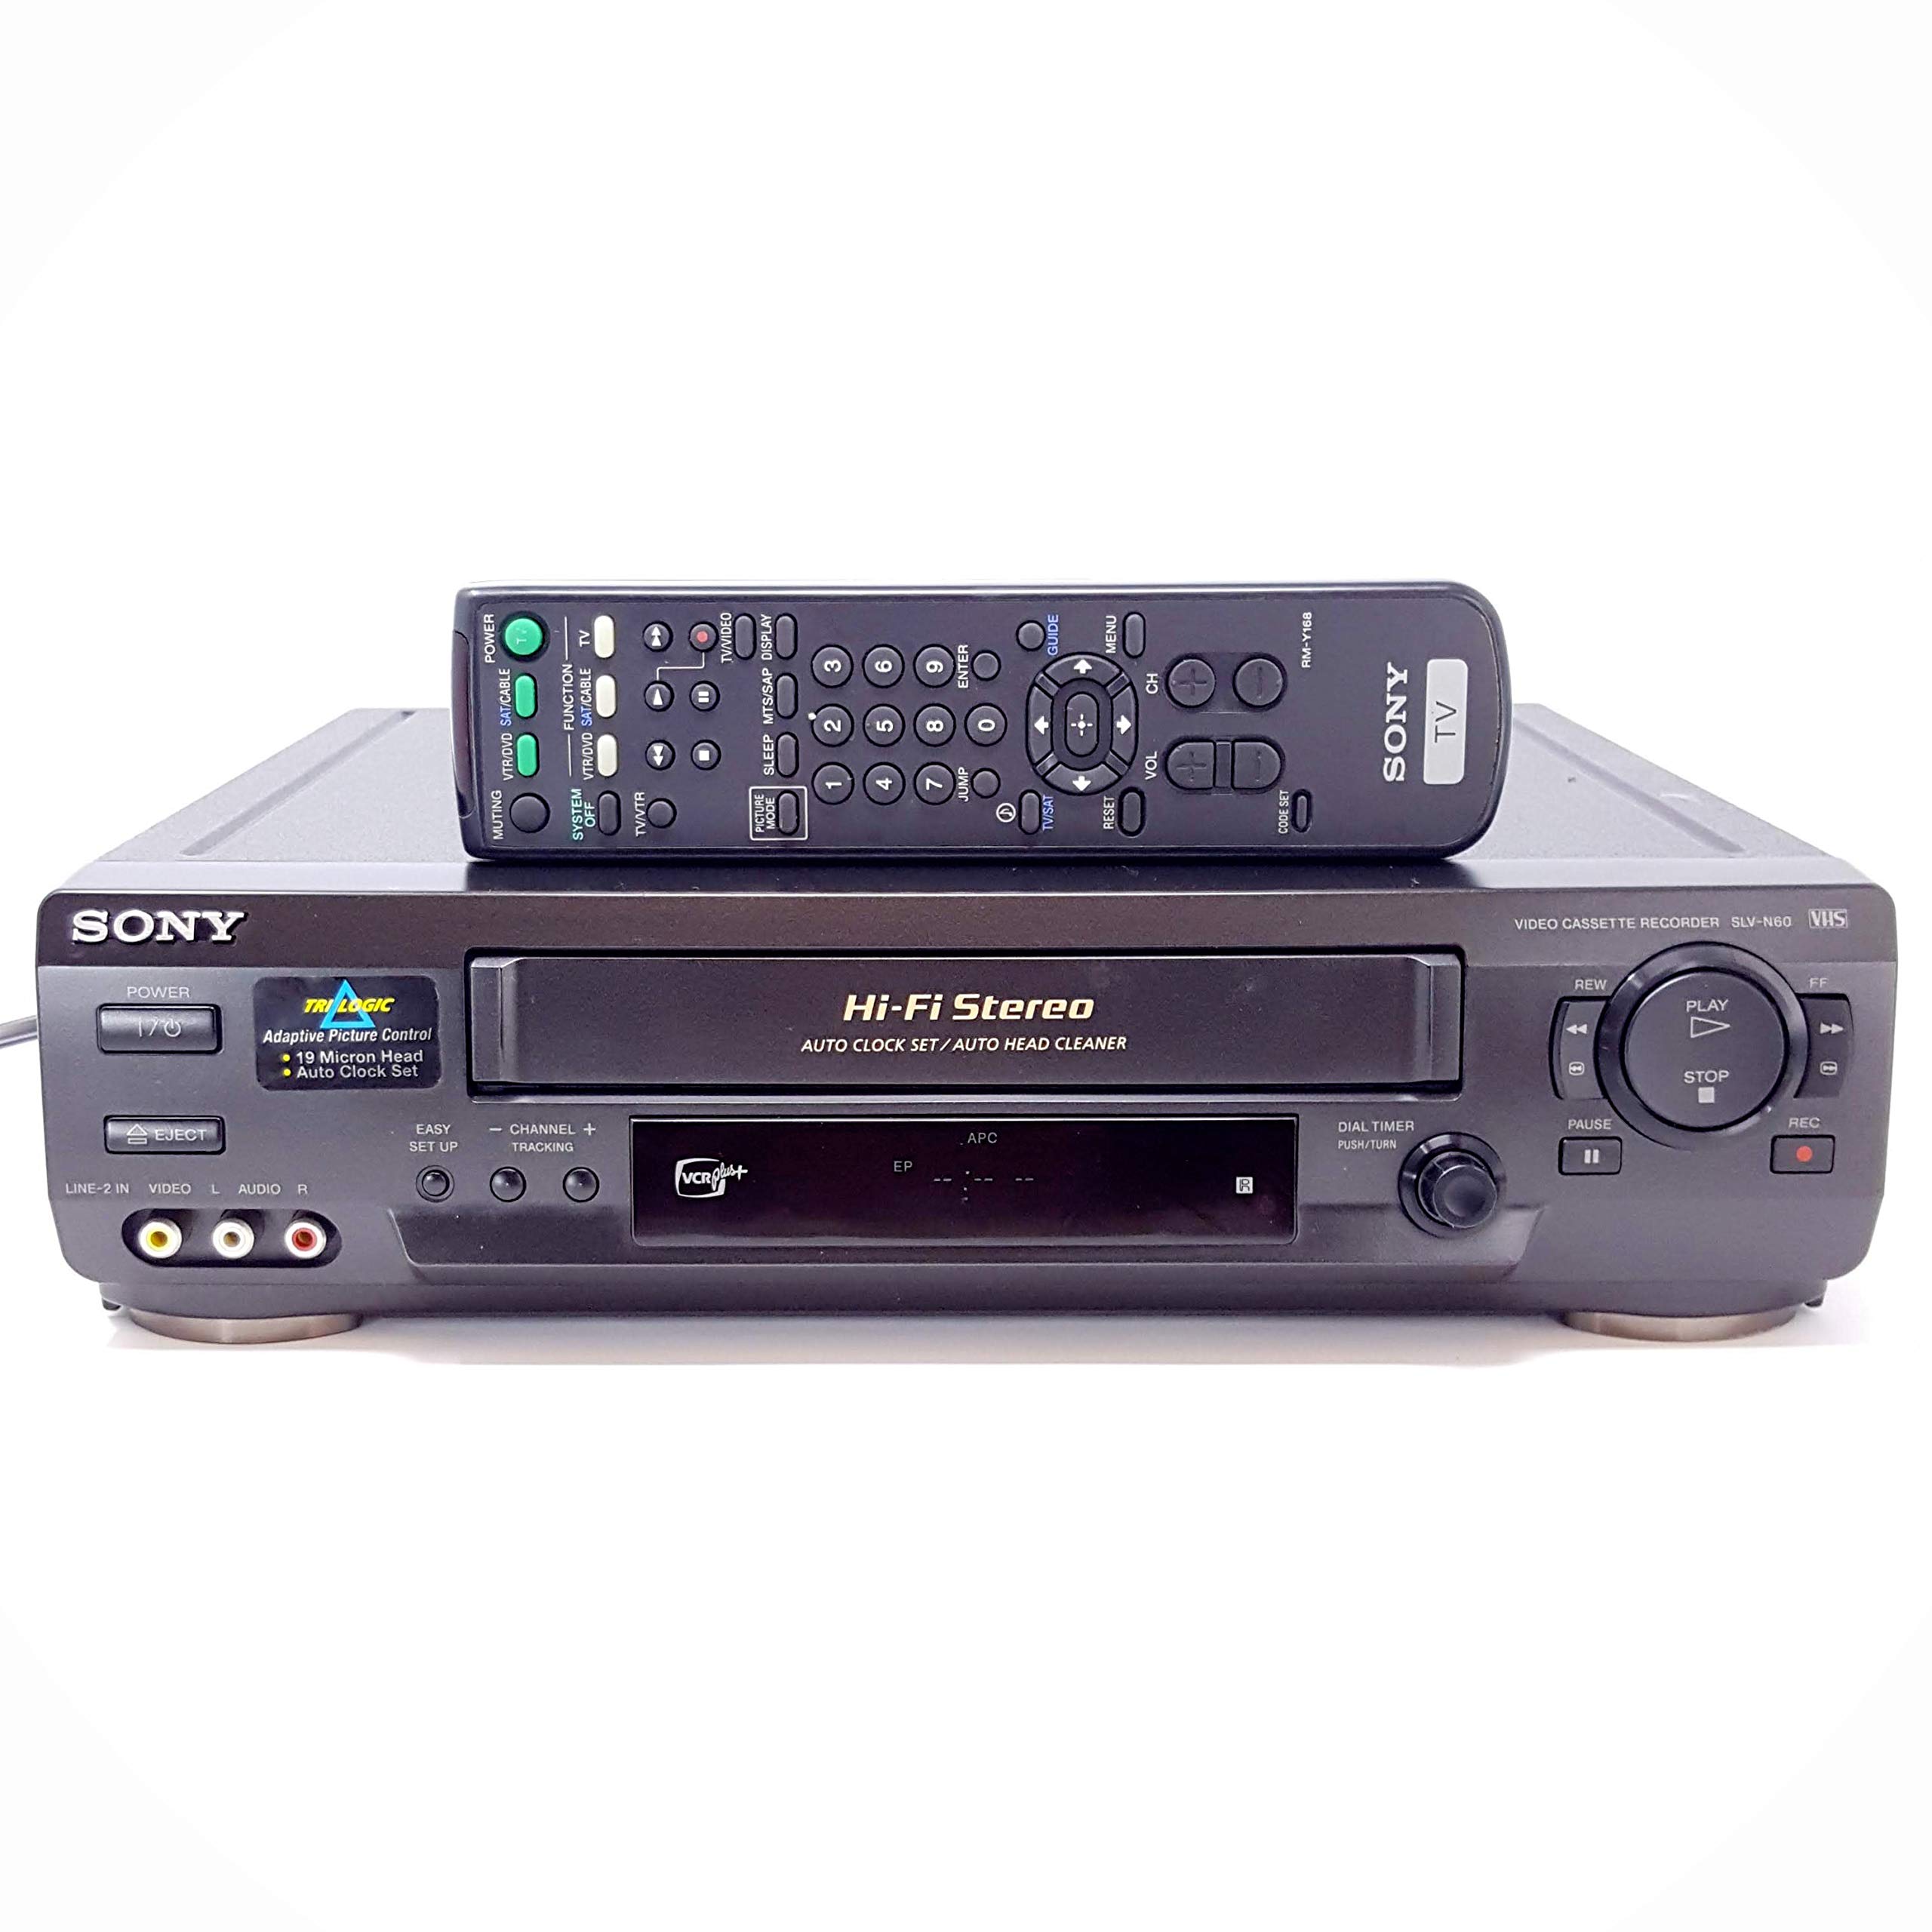 SONY SLV-N60 VCR VHS PLAYER 4-HEAD Hi-Fi STEREO WITH REMOTE - TE